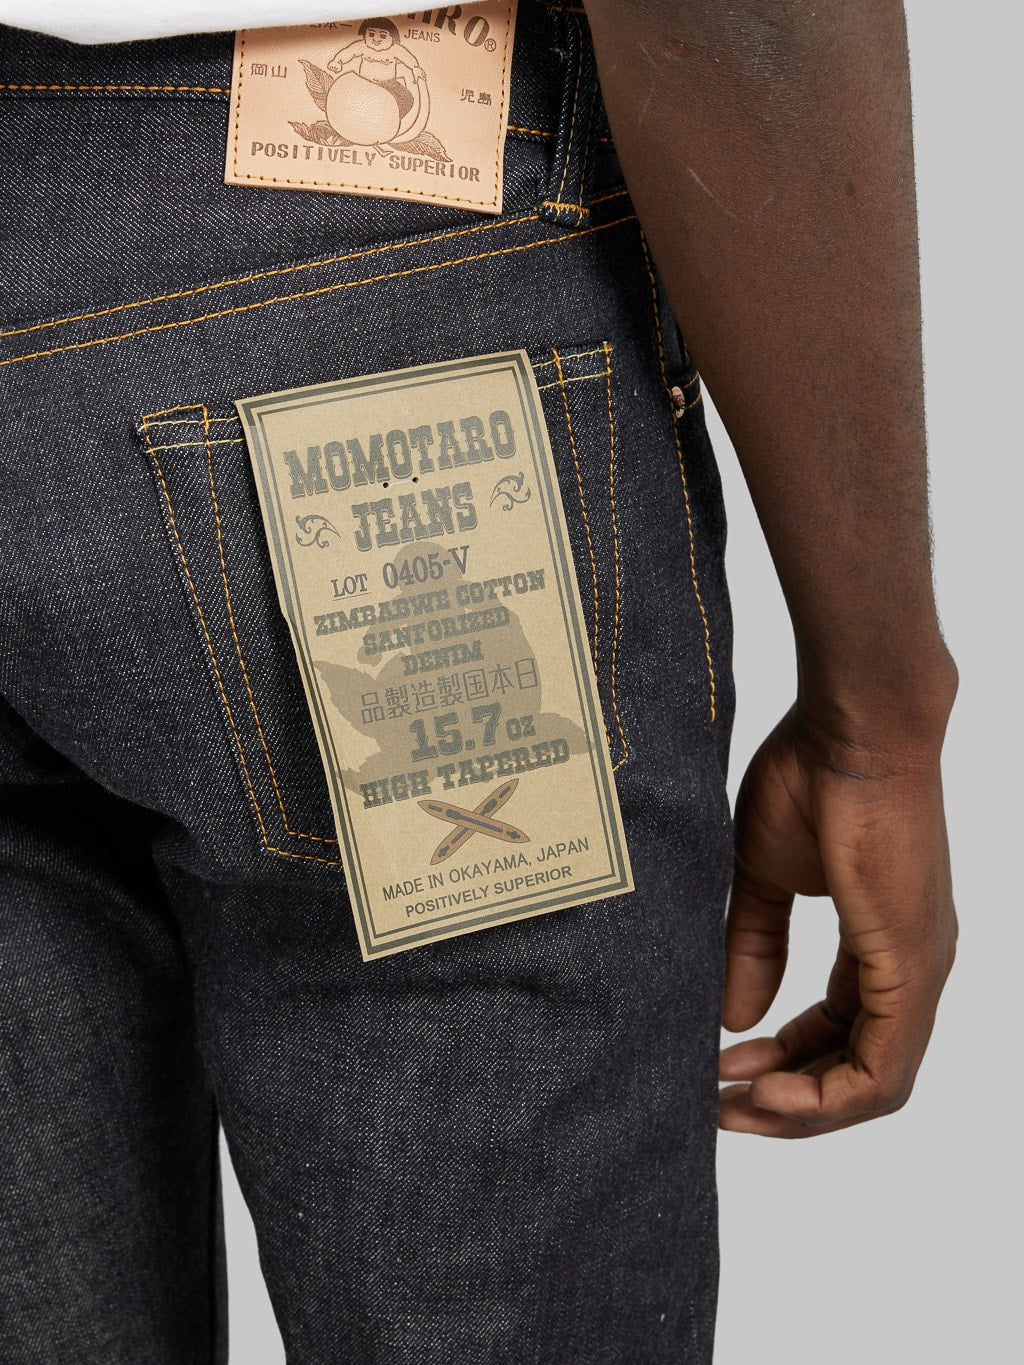 momotaro jeans 0405 v selvedge denim high tapered pocket rise